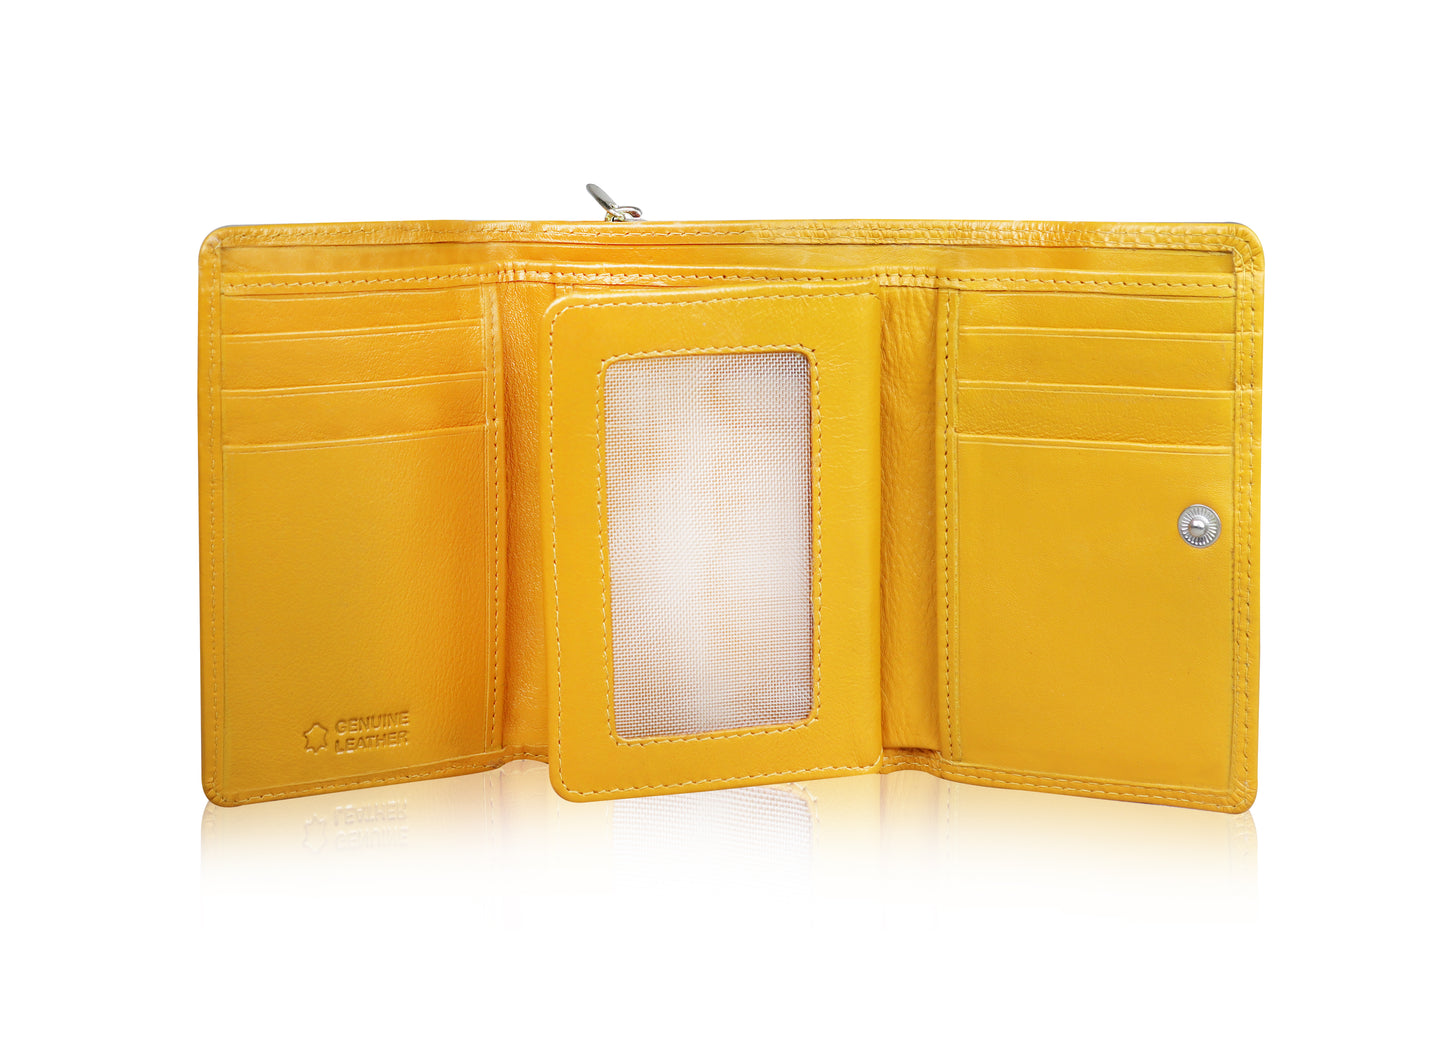 Calfnero Genuine Leather Women's wallet (2312-Yellow)